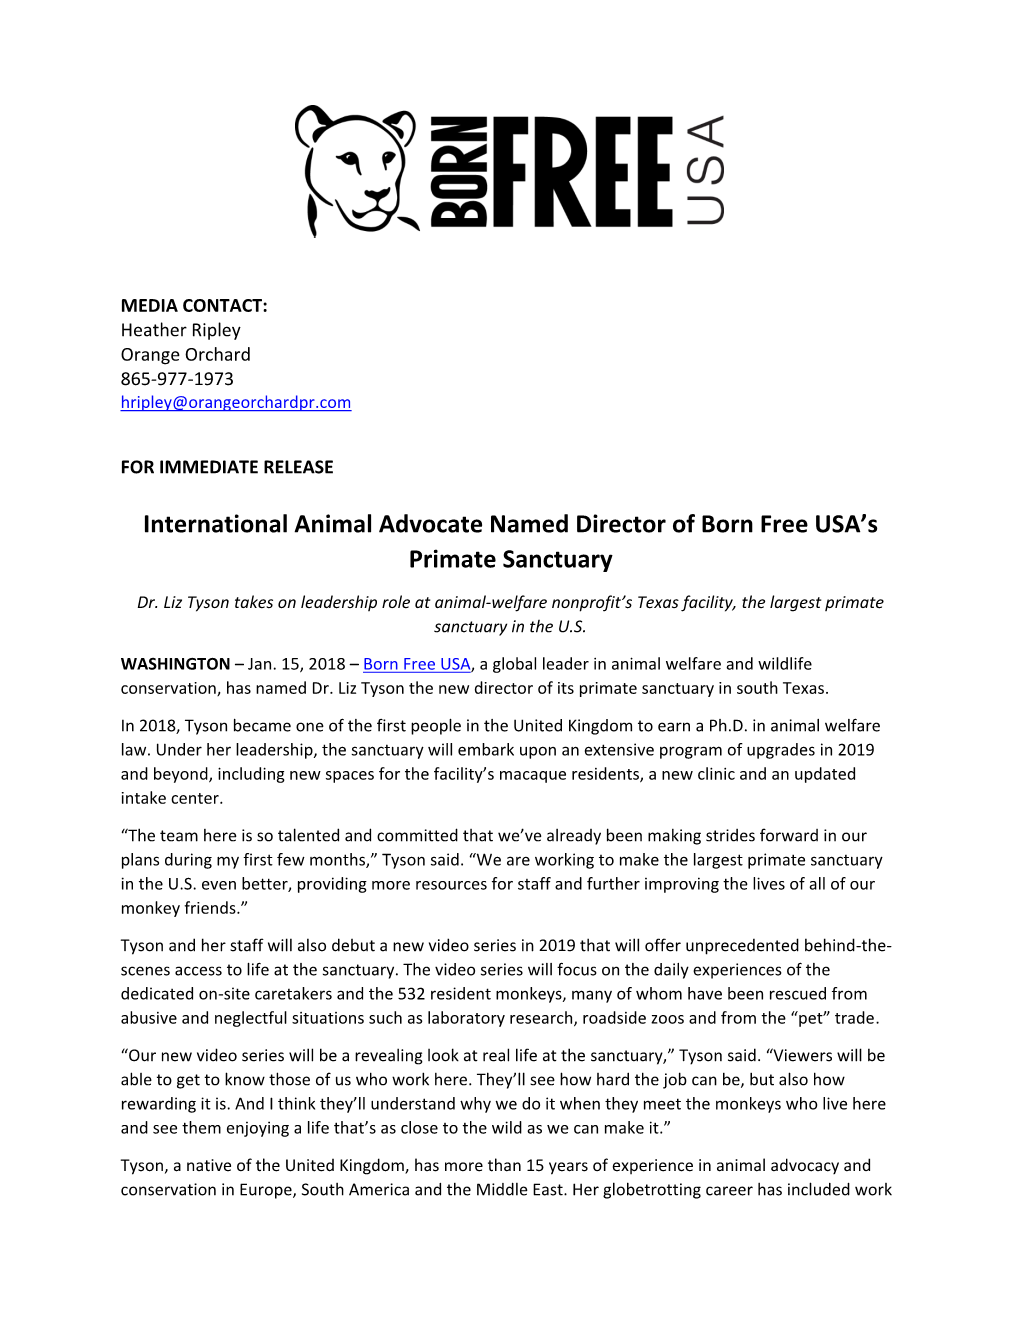 International Animal Advocate Named Director of Born Free USA's Primate